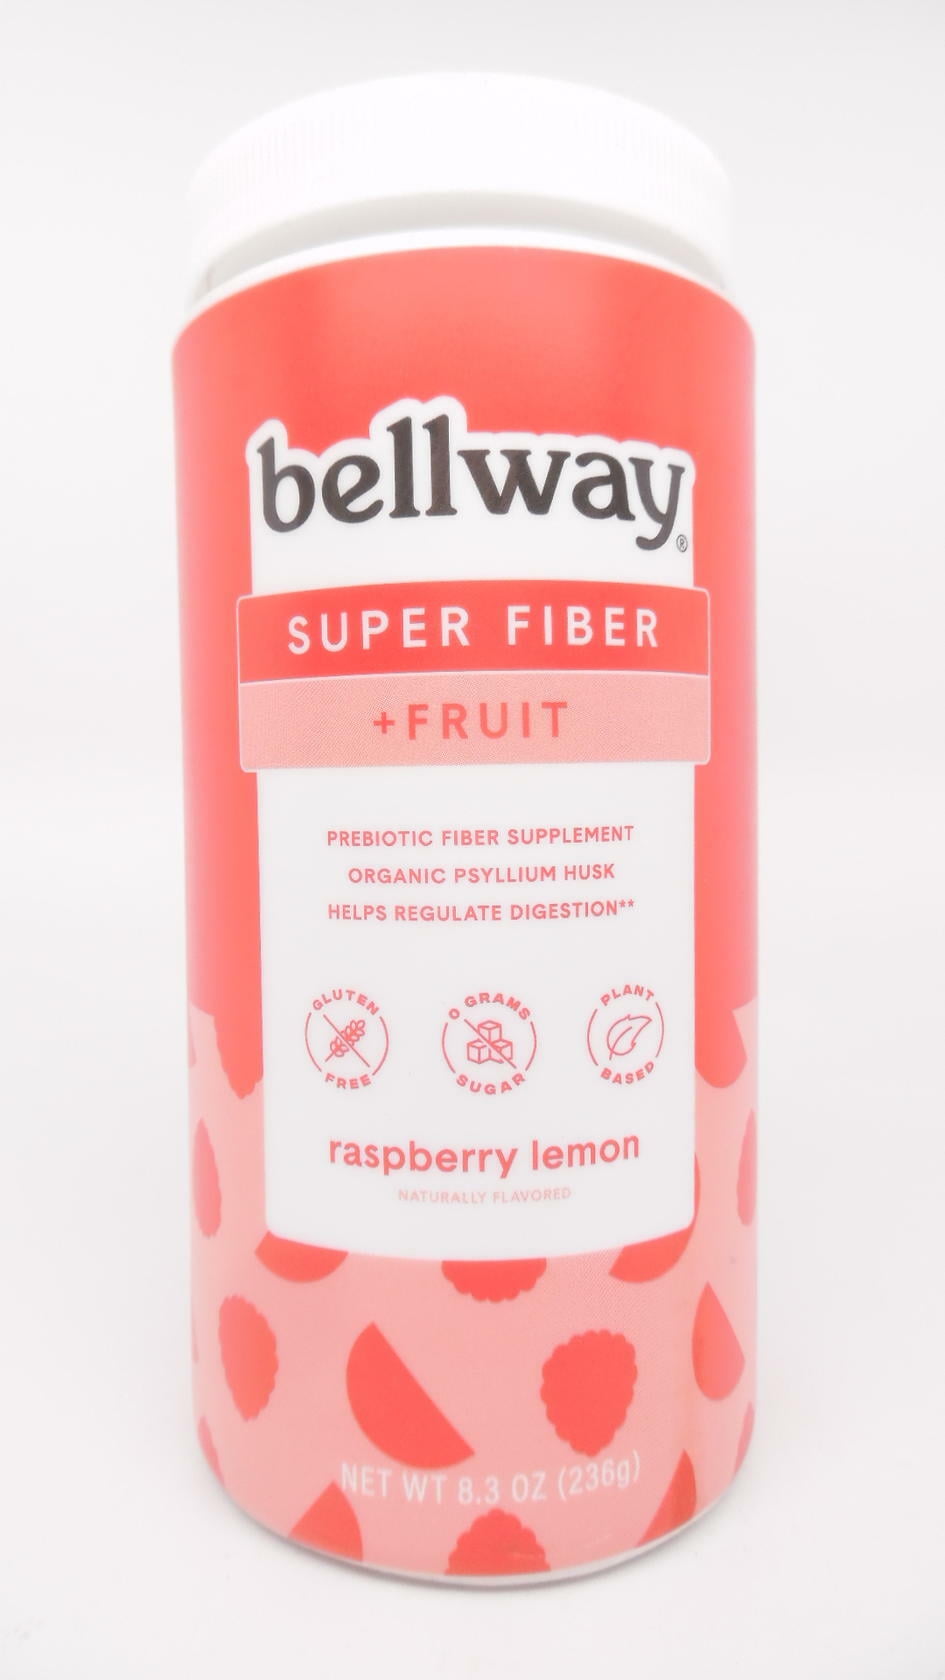 bellway-super-fiber-fruit-prebiotic-fiber-supplement-raspberry-lemon